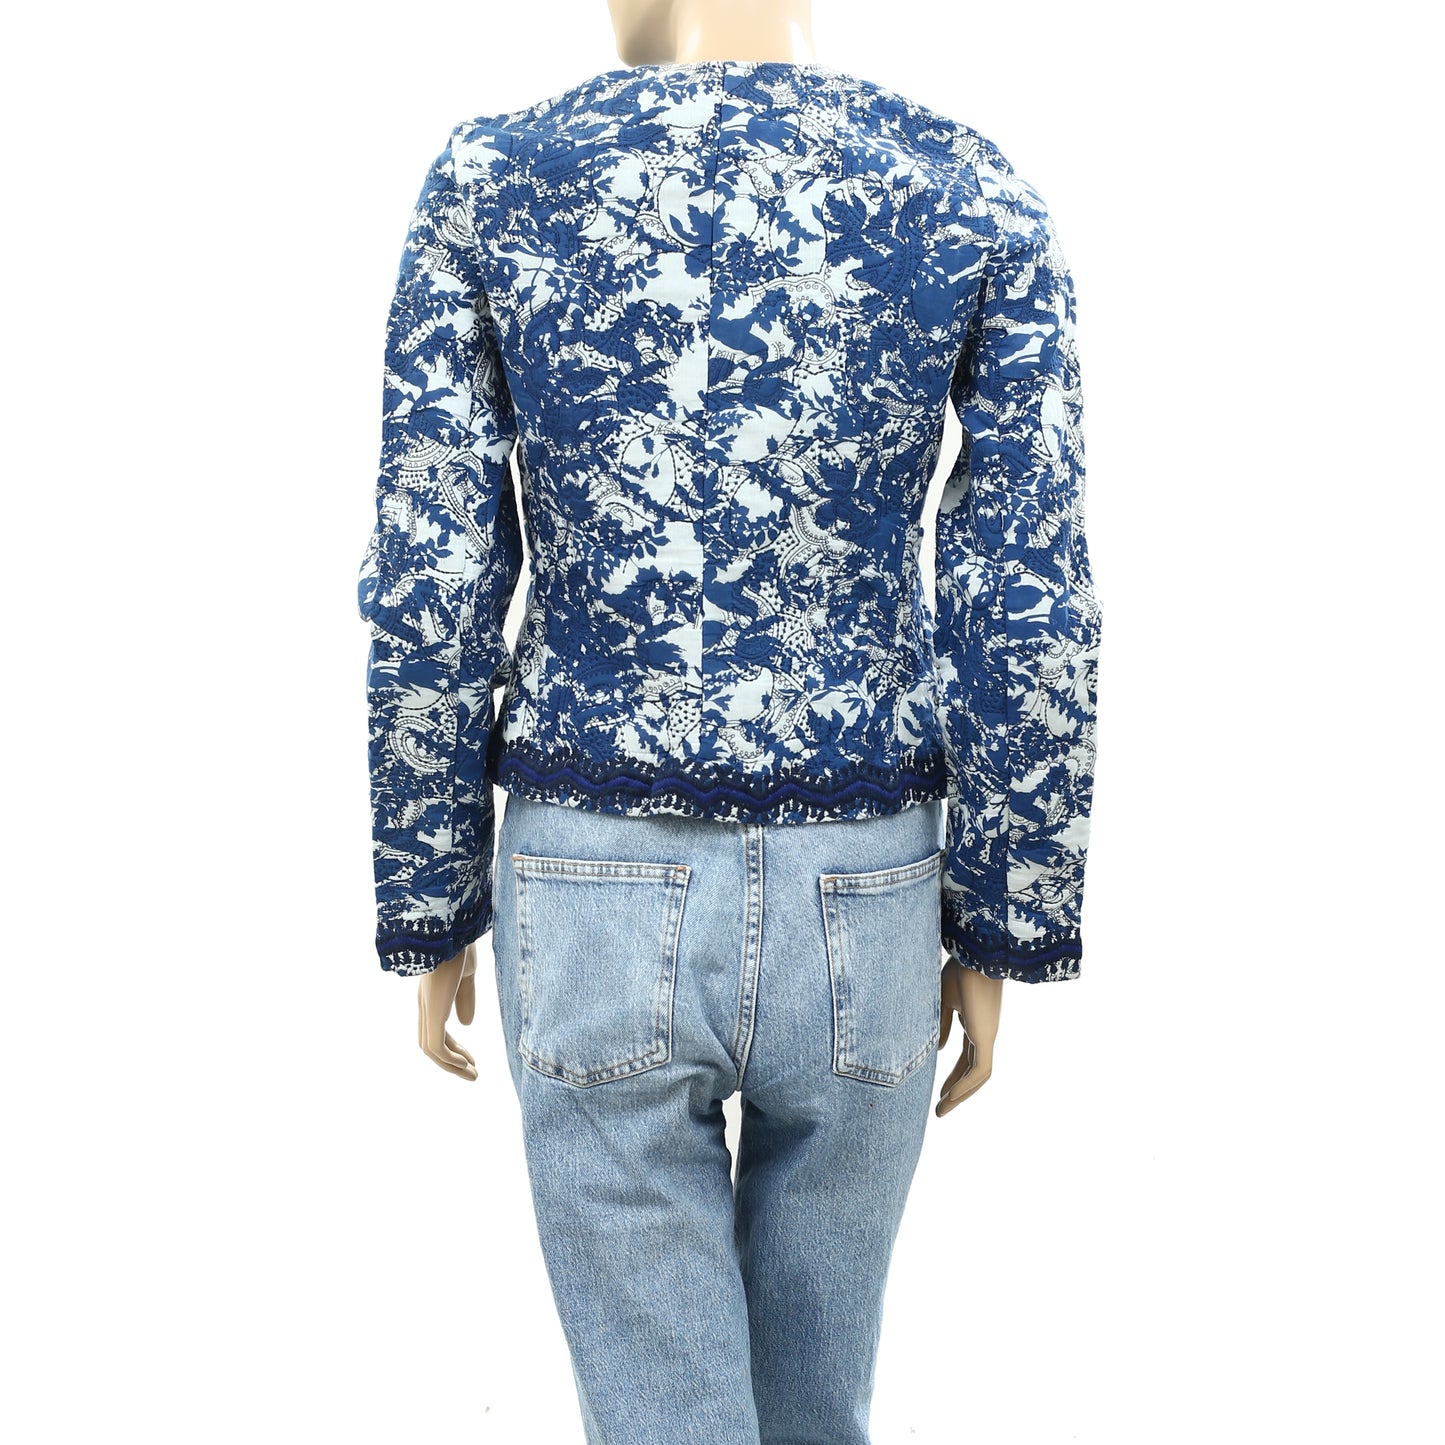 Sezane Printed Floral Embroidered Jacket Blazer Top